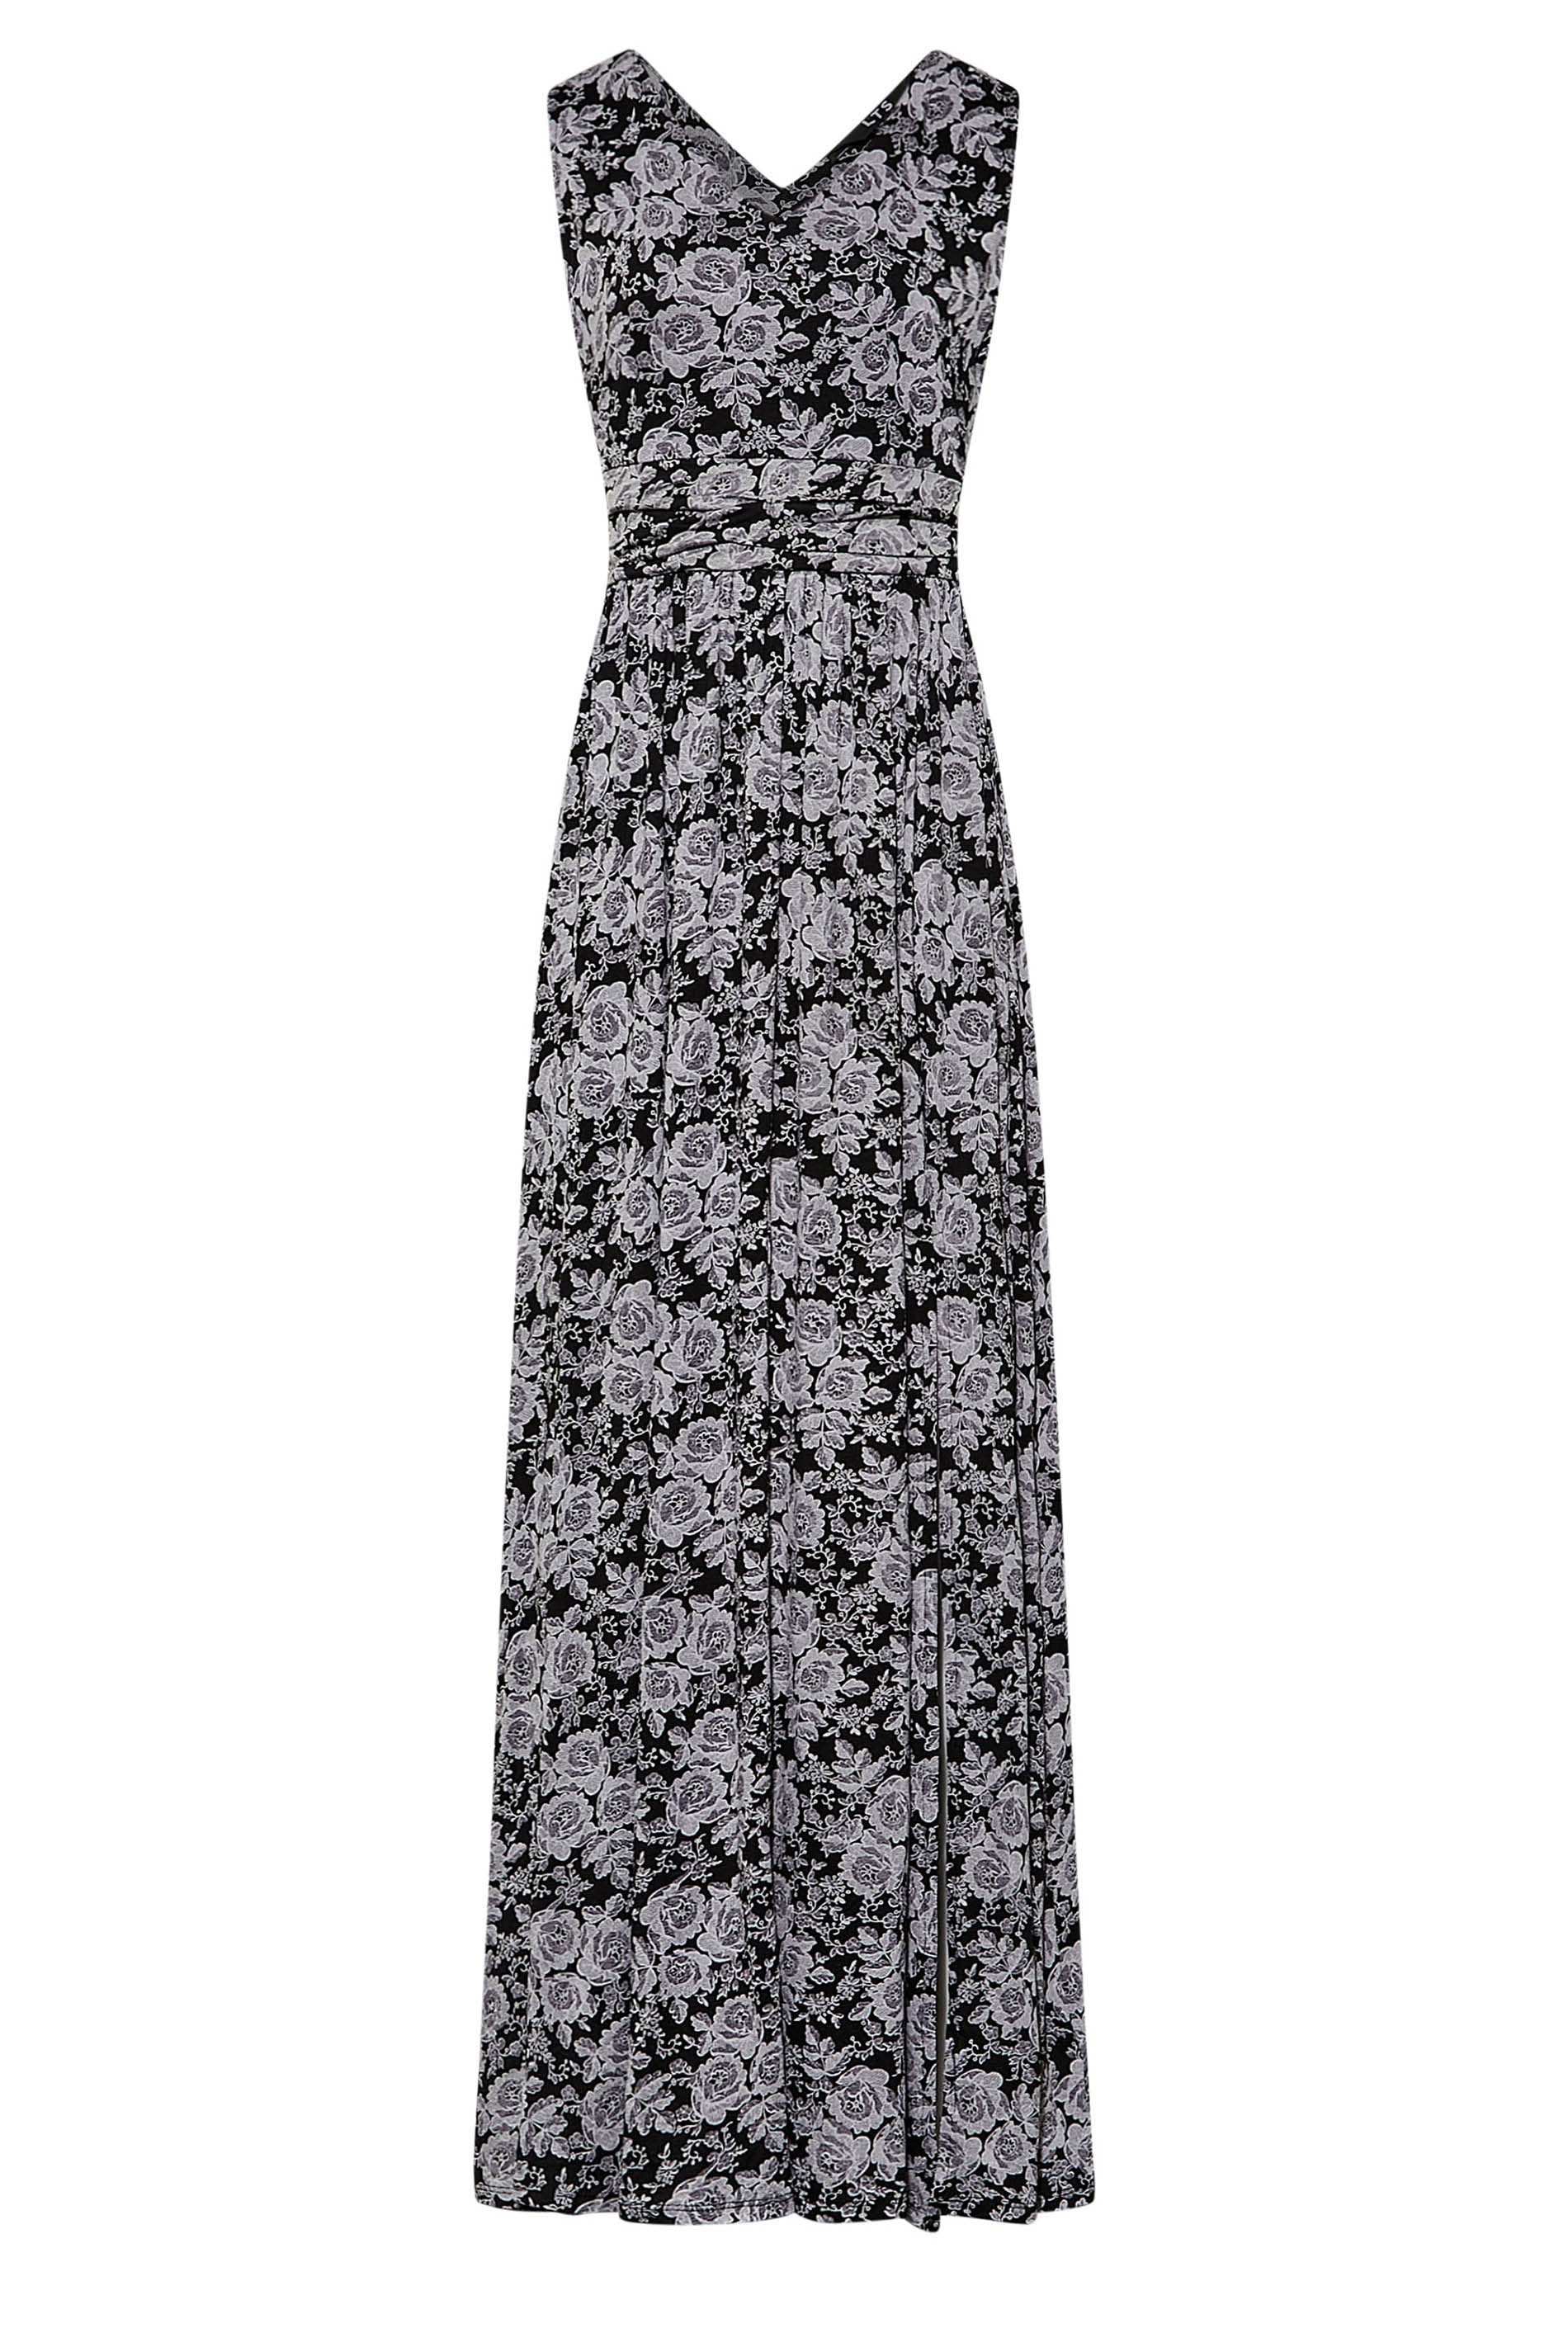 Tall Women's Black Floral Side Slit Maxi Dress | Long Tall Sally